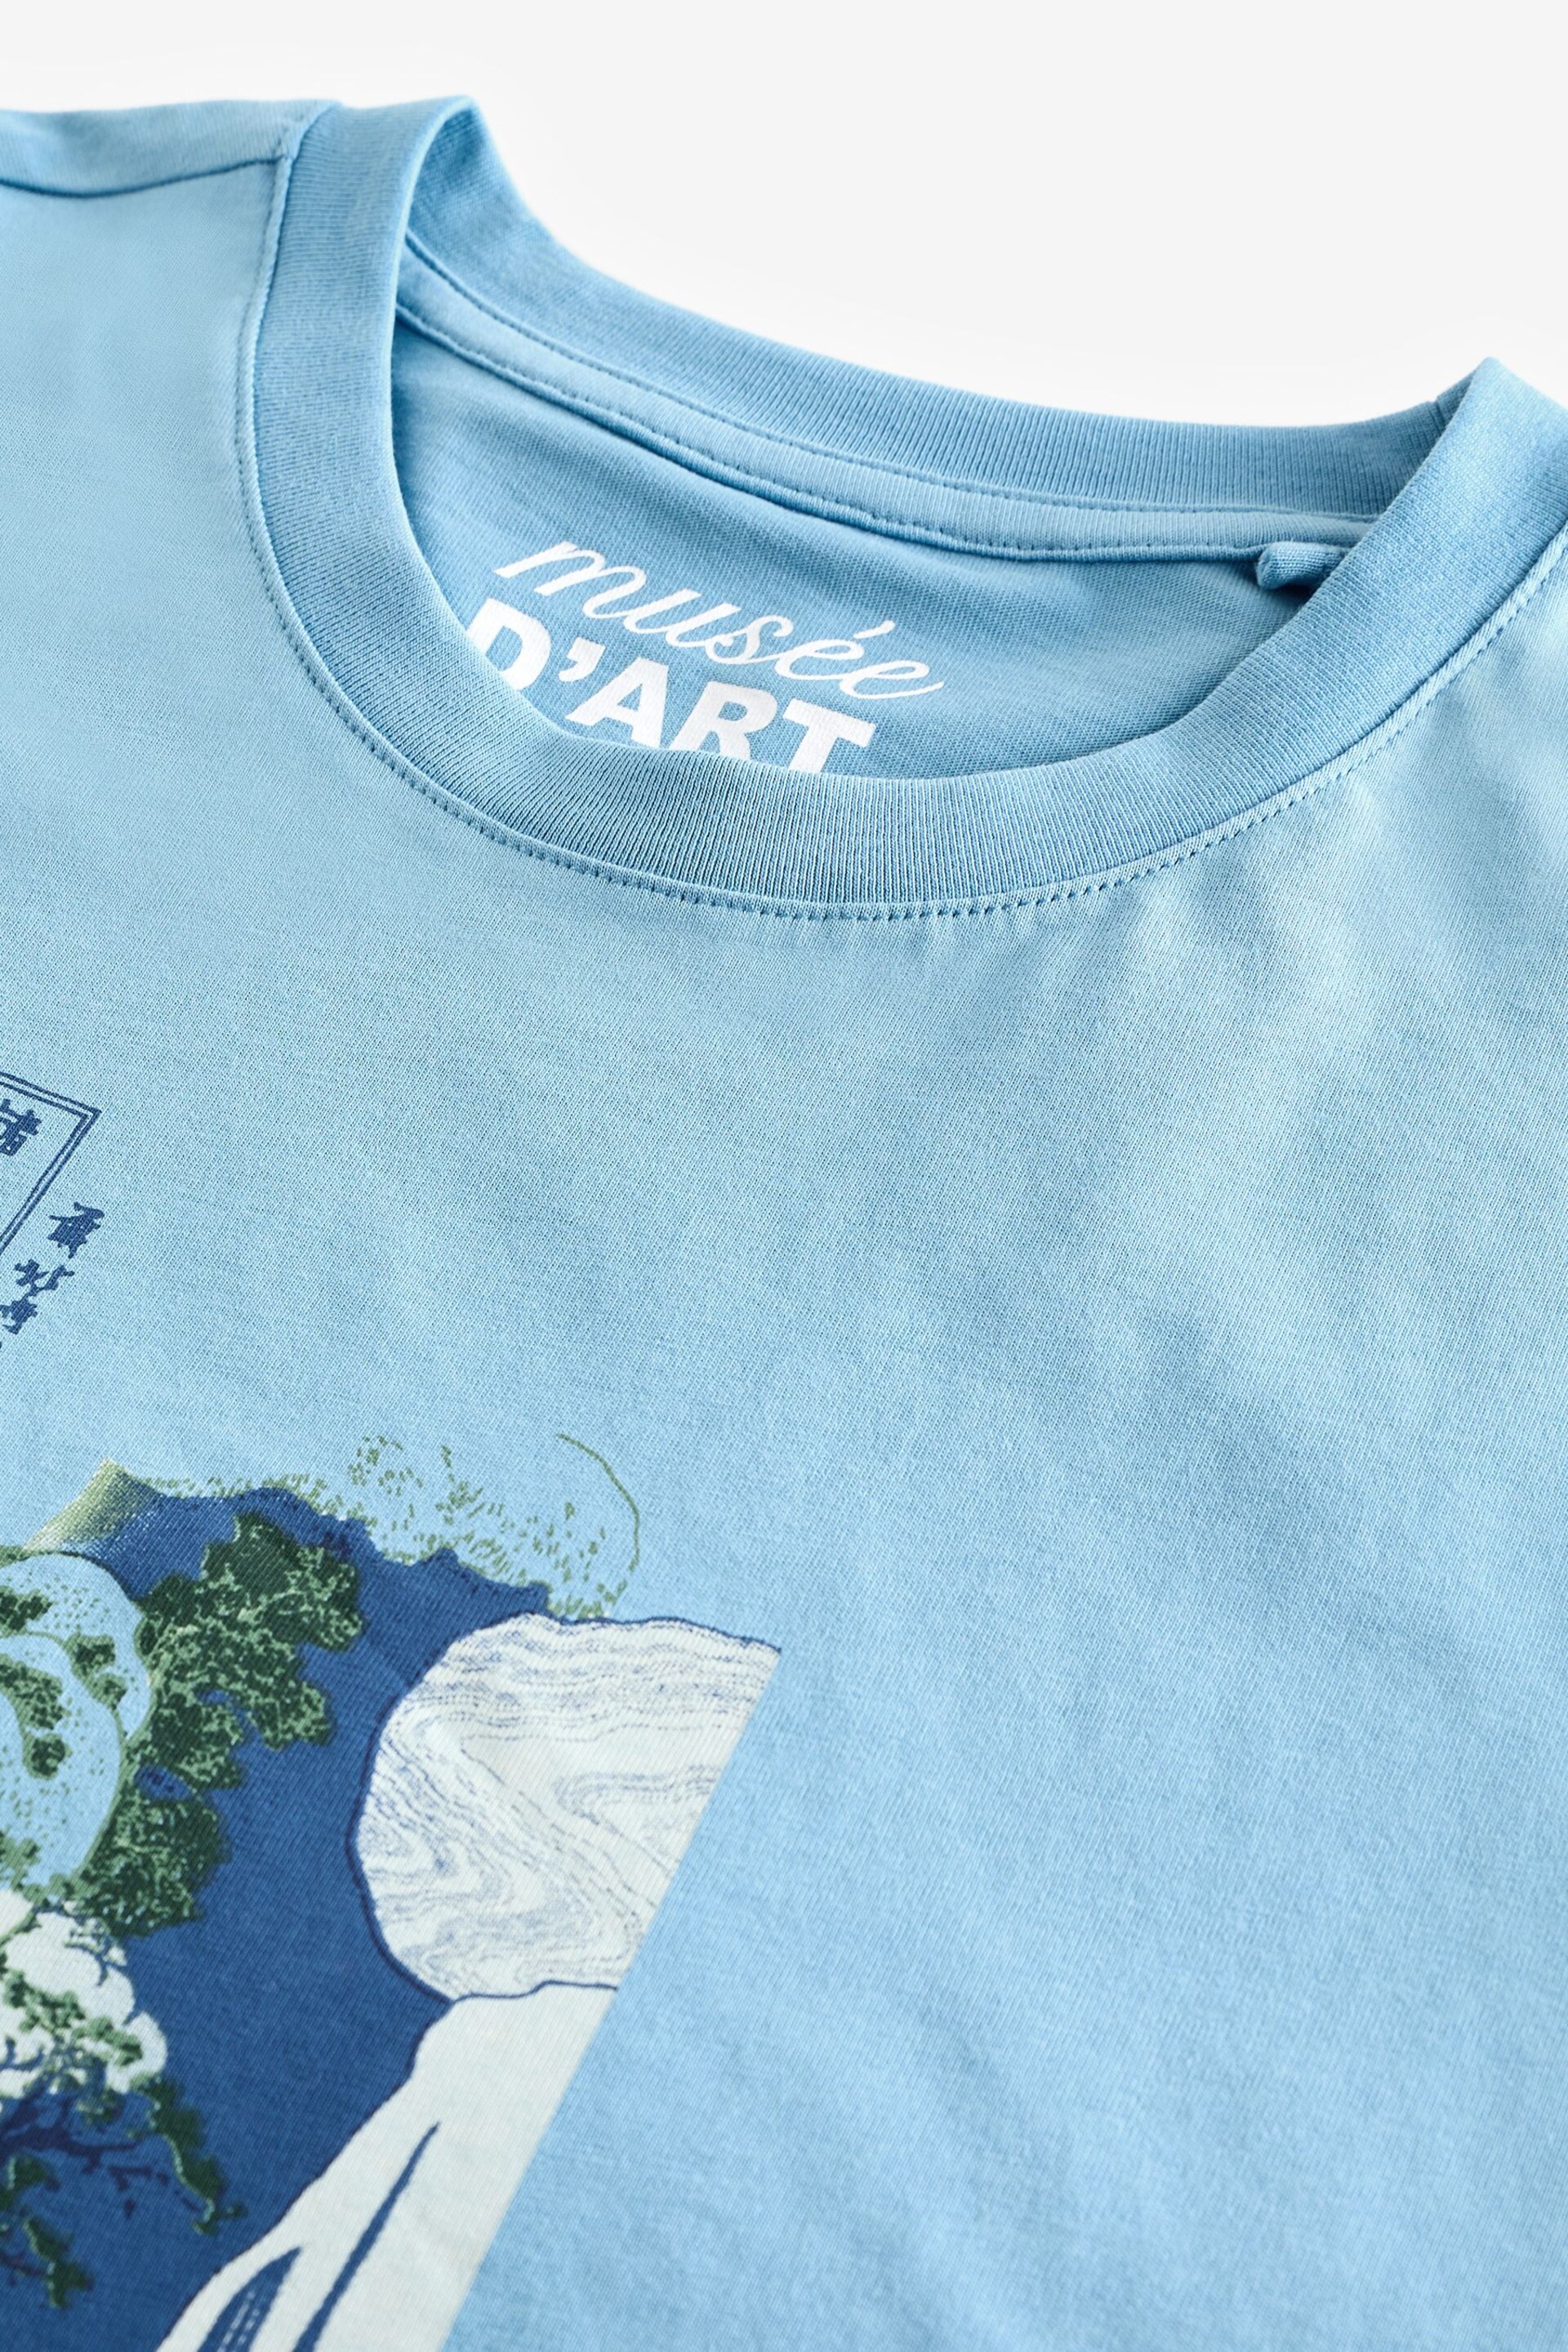 Blue Hokusai Waterfall Artist Licence T-Shirt - Image 6 of 7